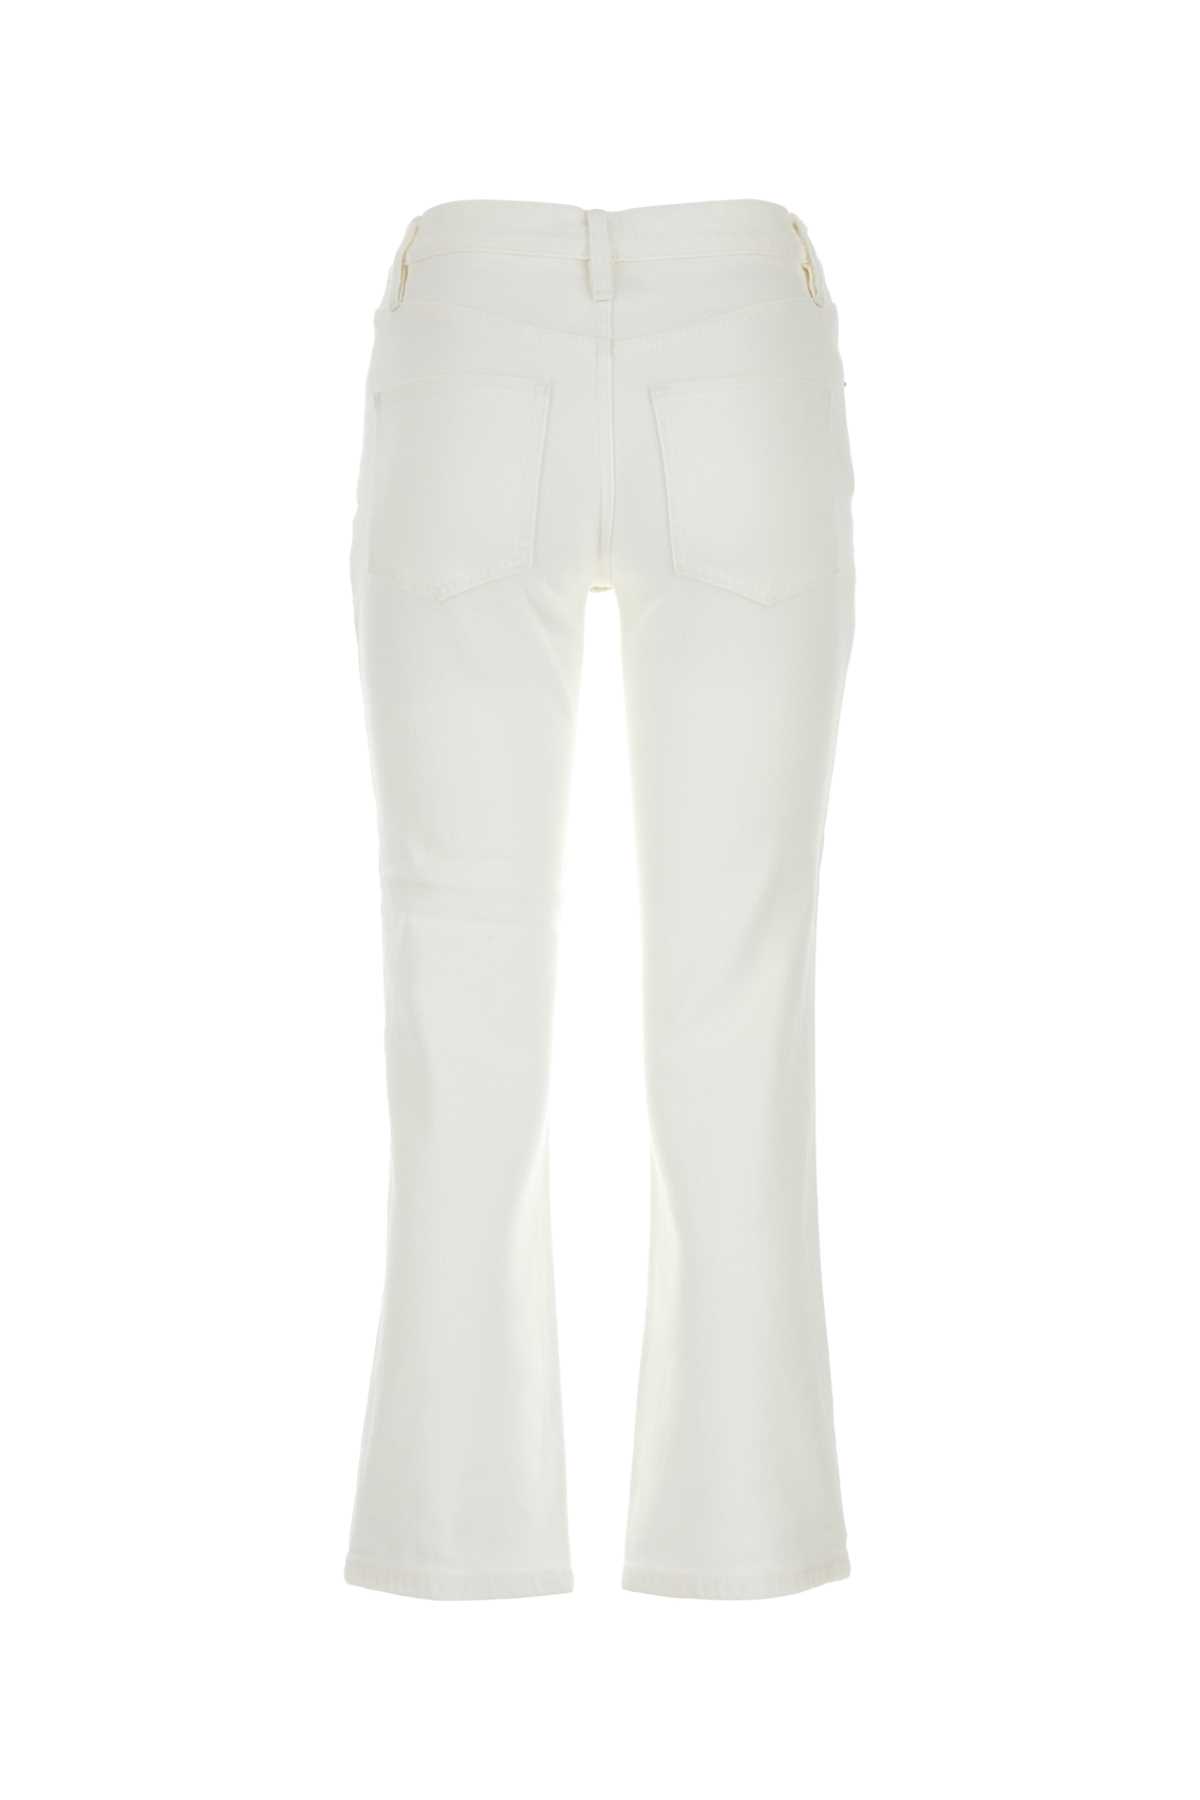 Shop Tory Burch White Stretch Denim Jeans In Whitechalkwas